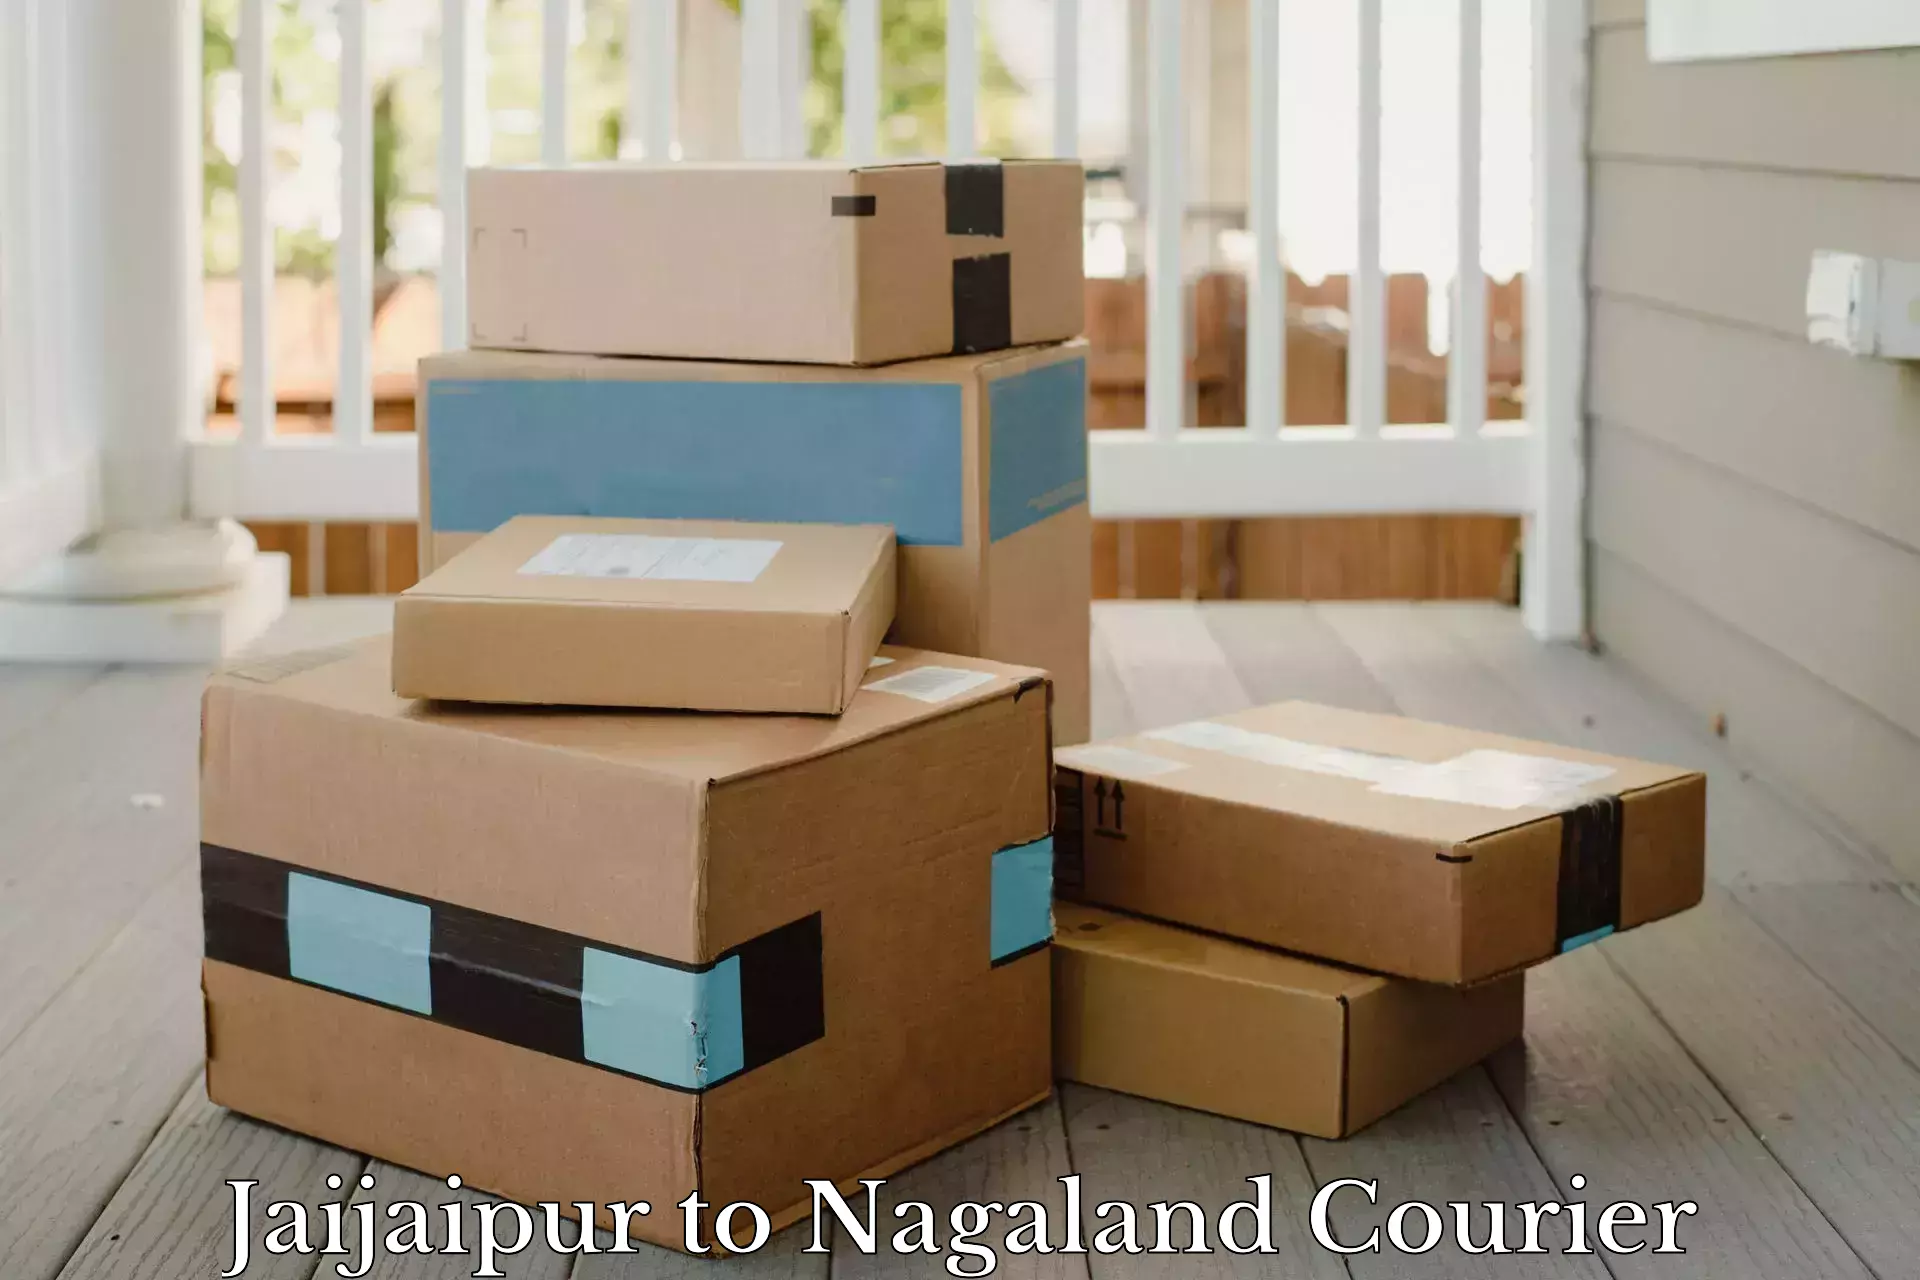 Global courier networks Jaijaipur to Nagaland